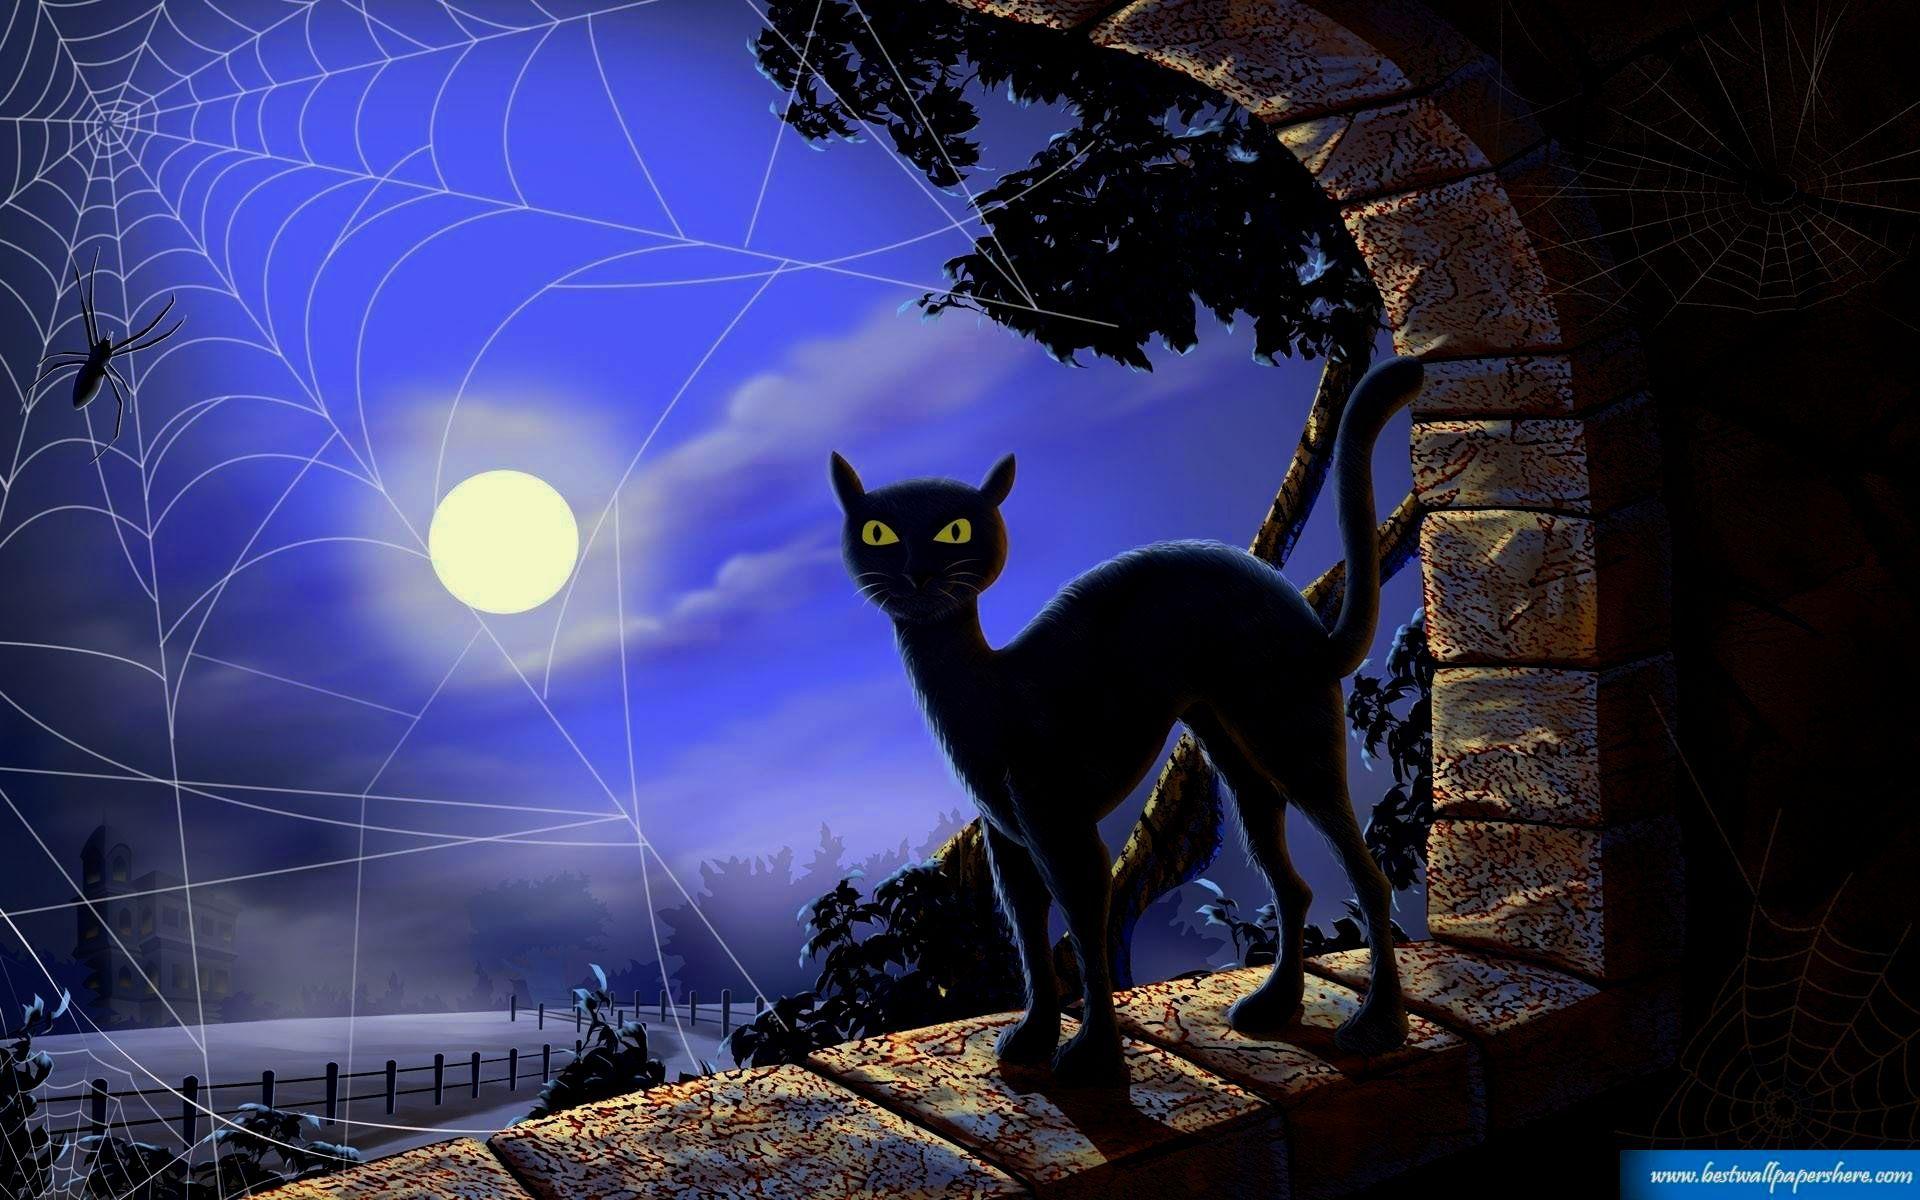 Black Cat Halloween Wallpaper. tianyihengfeng. Free Download High